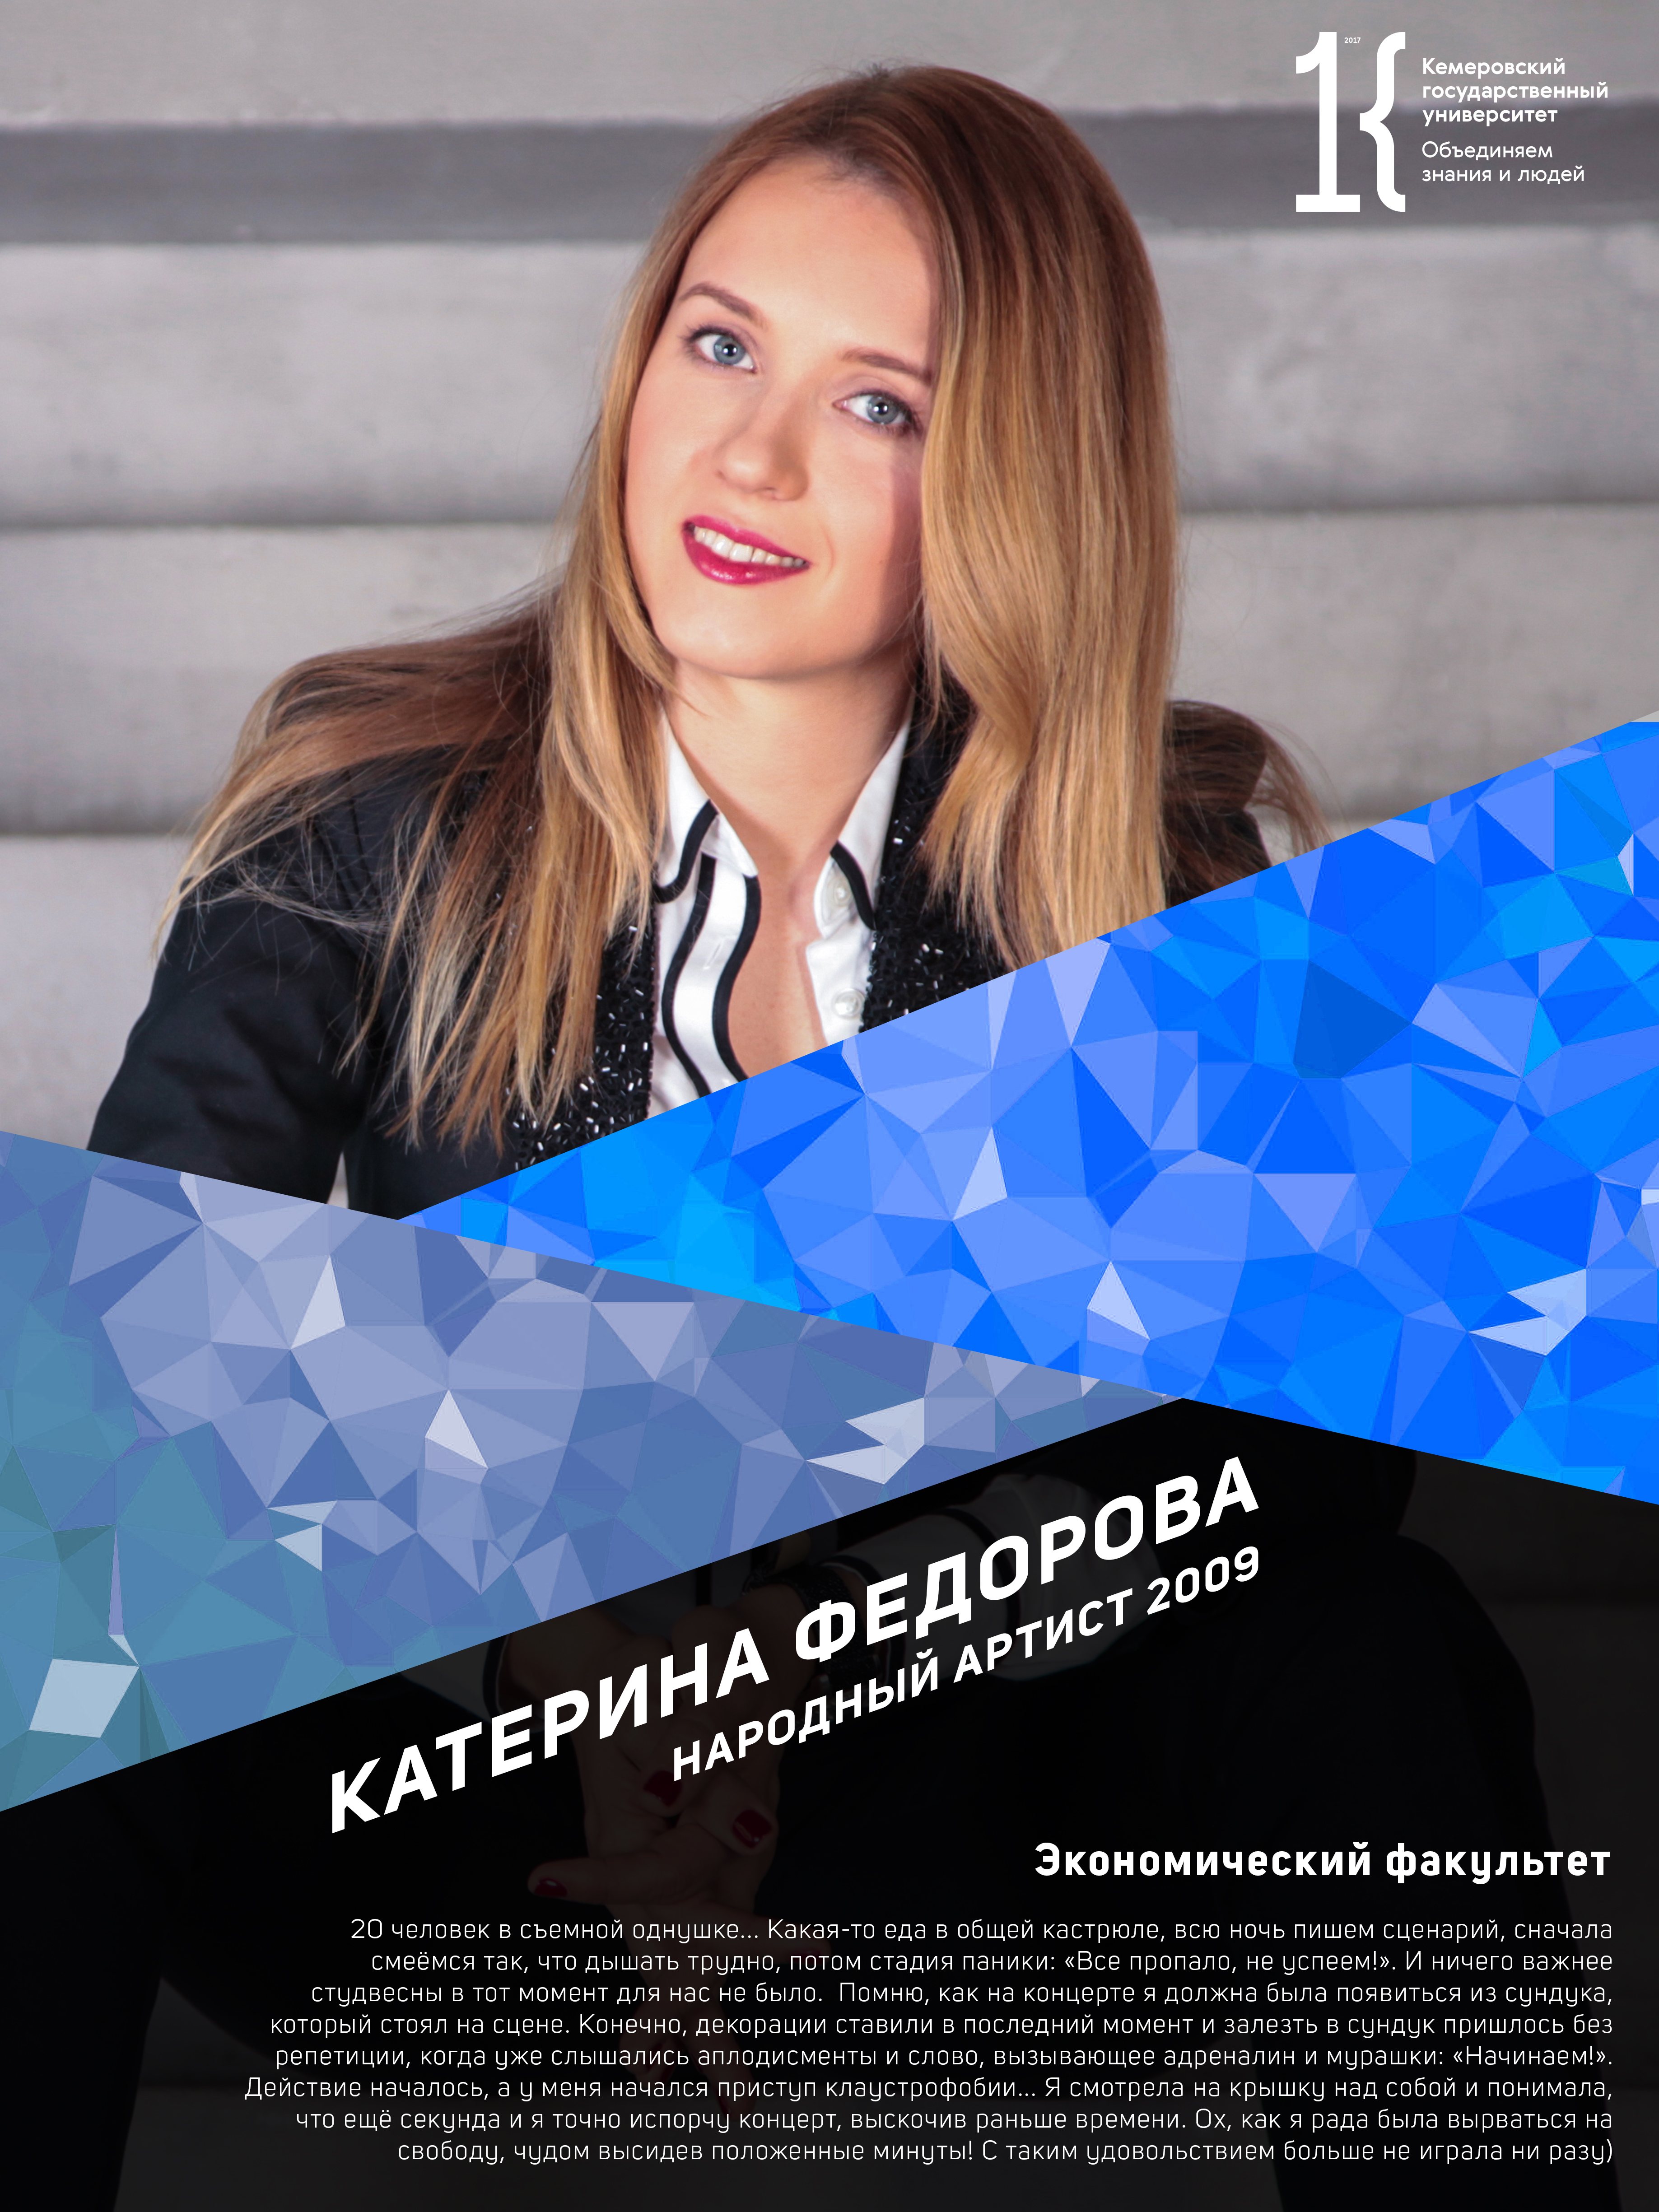 Катерина Фёдорова